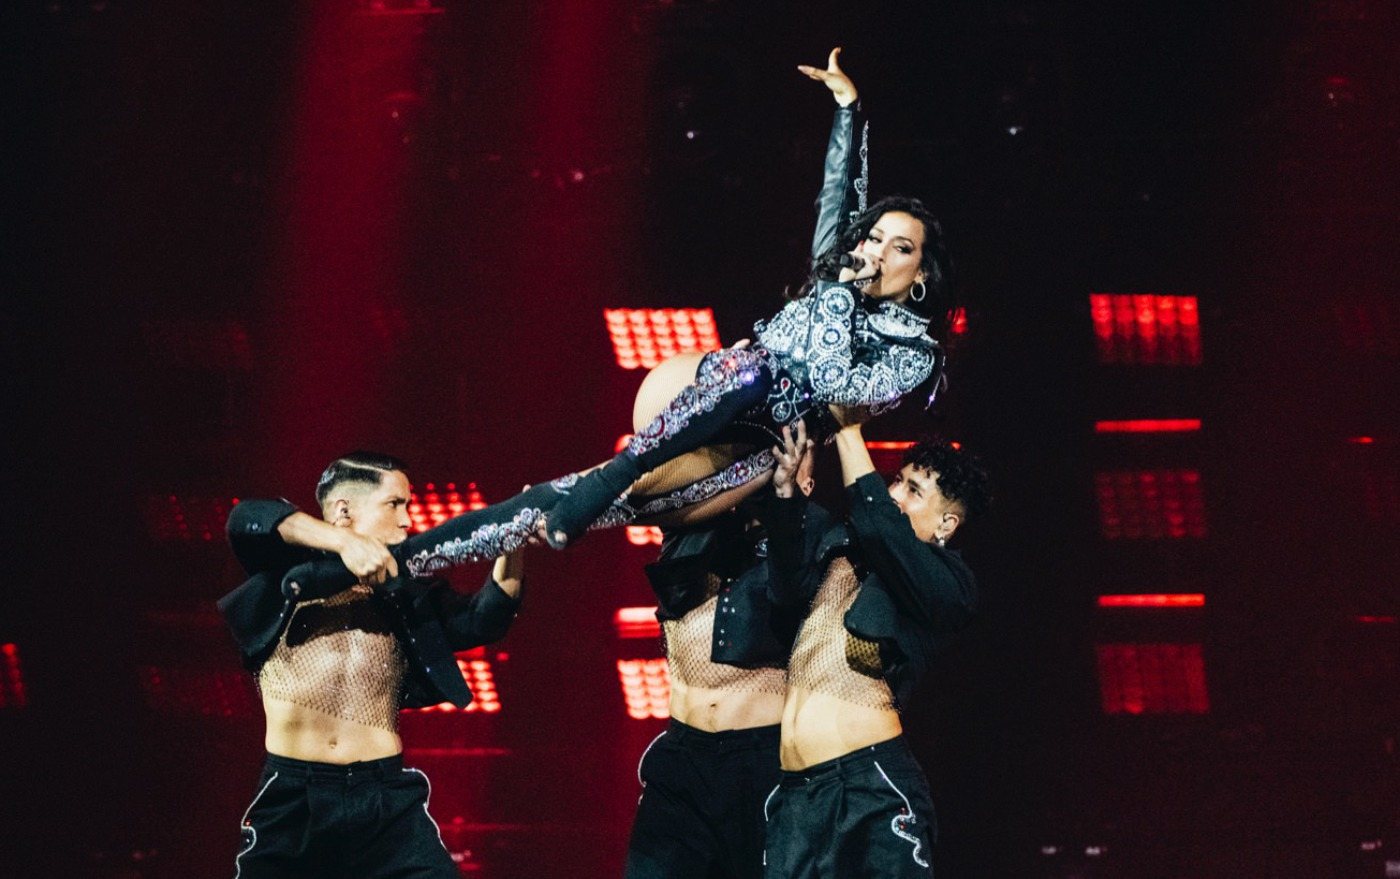 Chanel, reina de audiencias de Eurovisión con más de 6,8 millones de espectadores